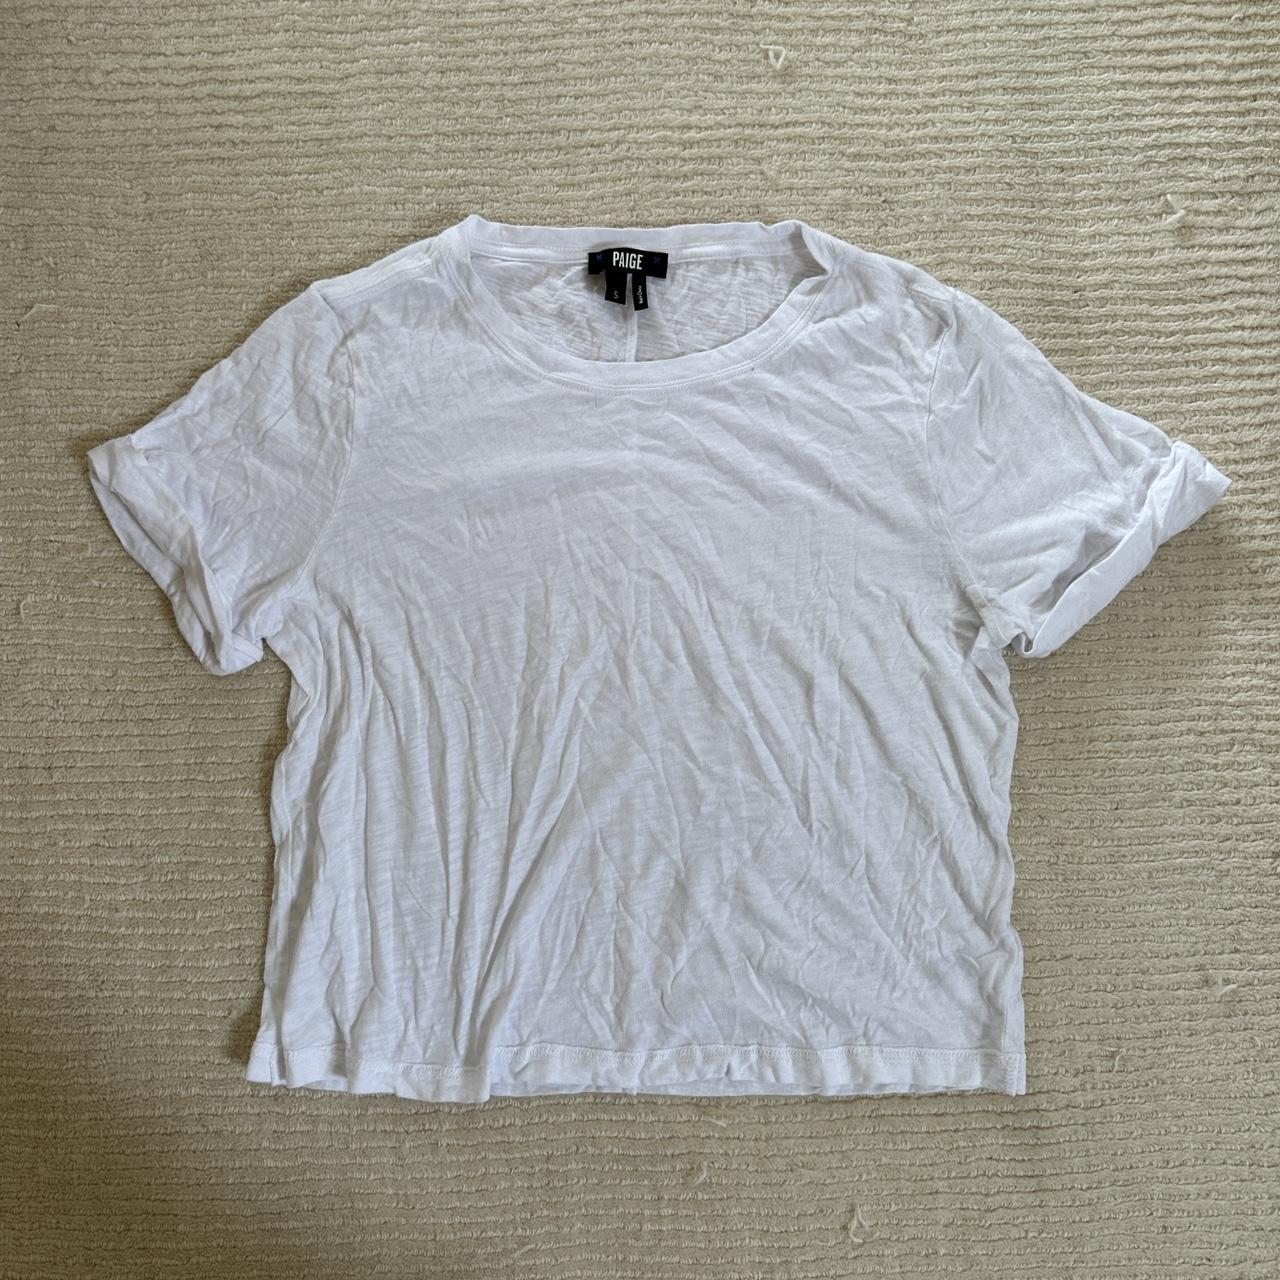 PAIGE Women's White T-shirt